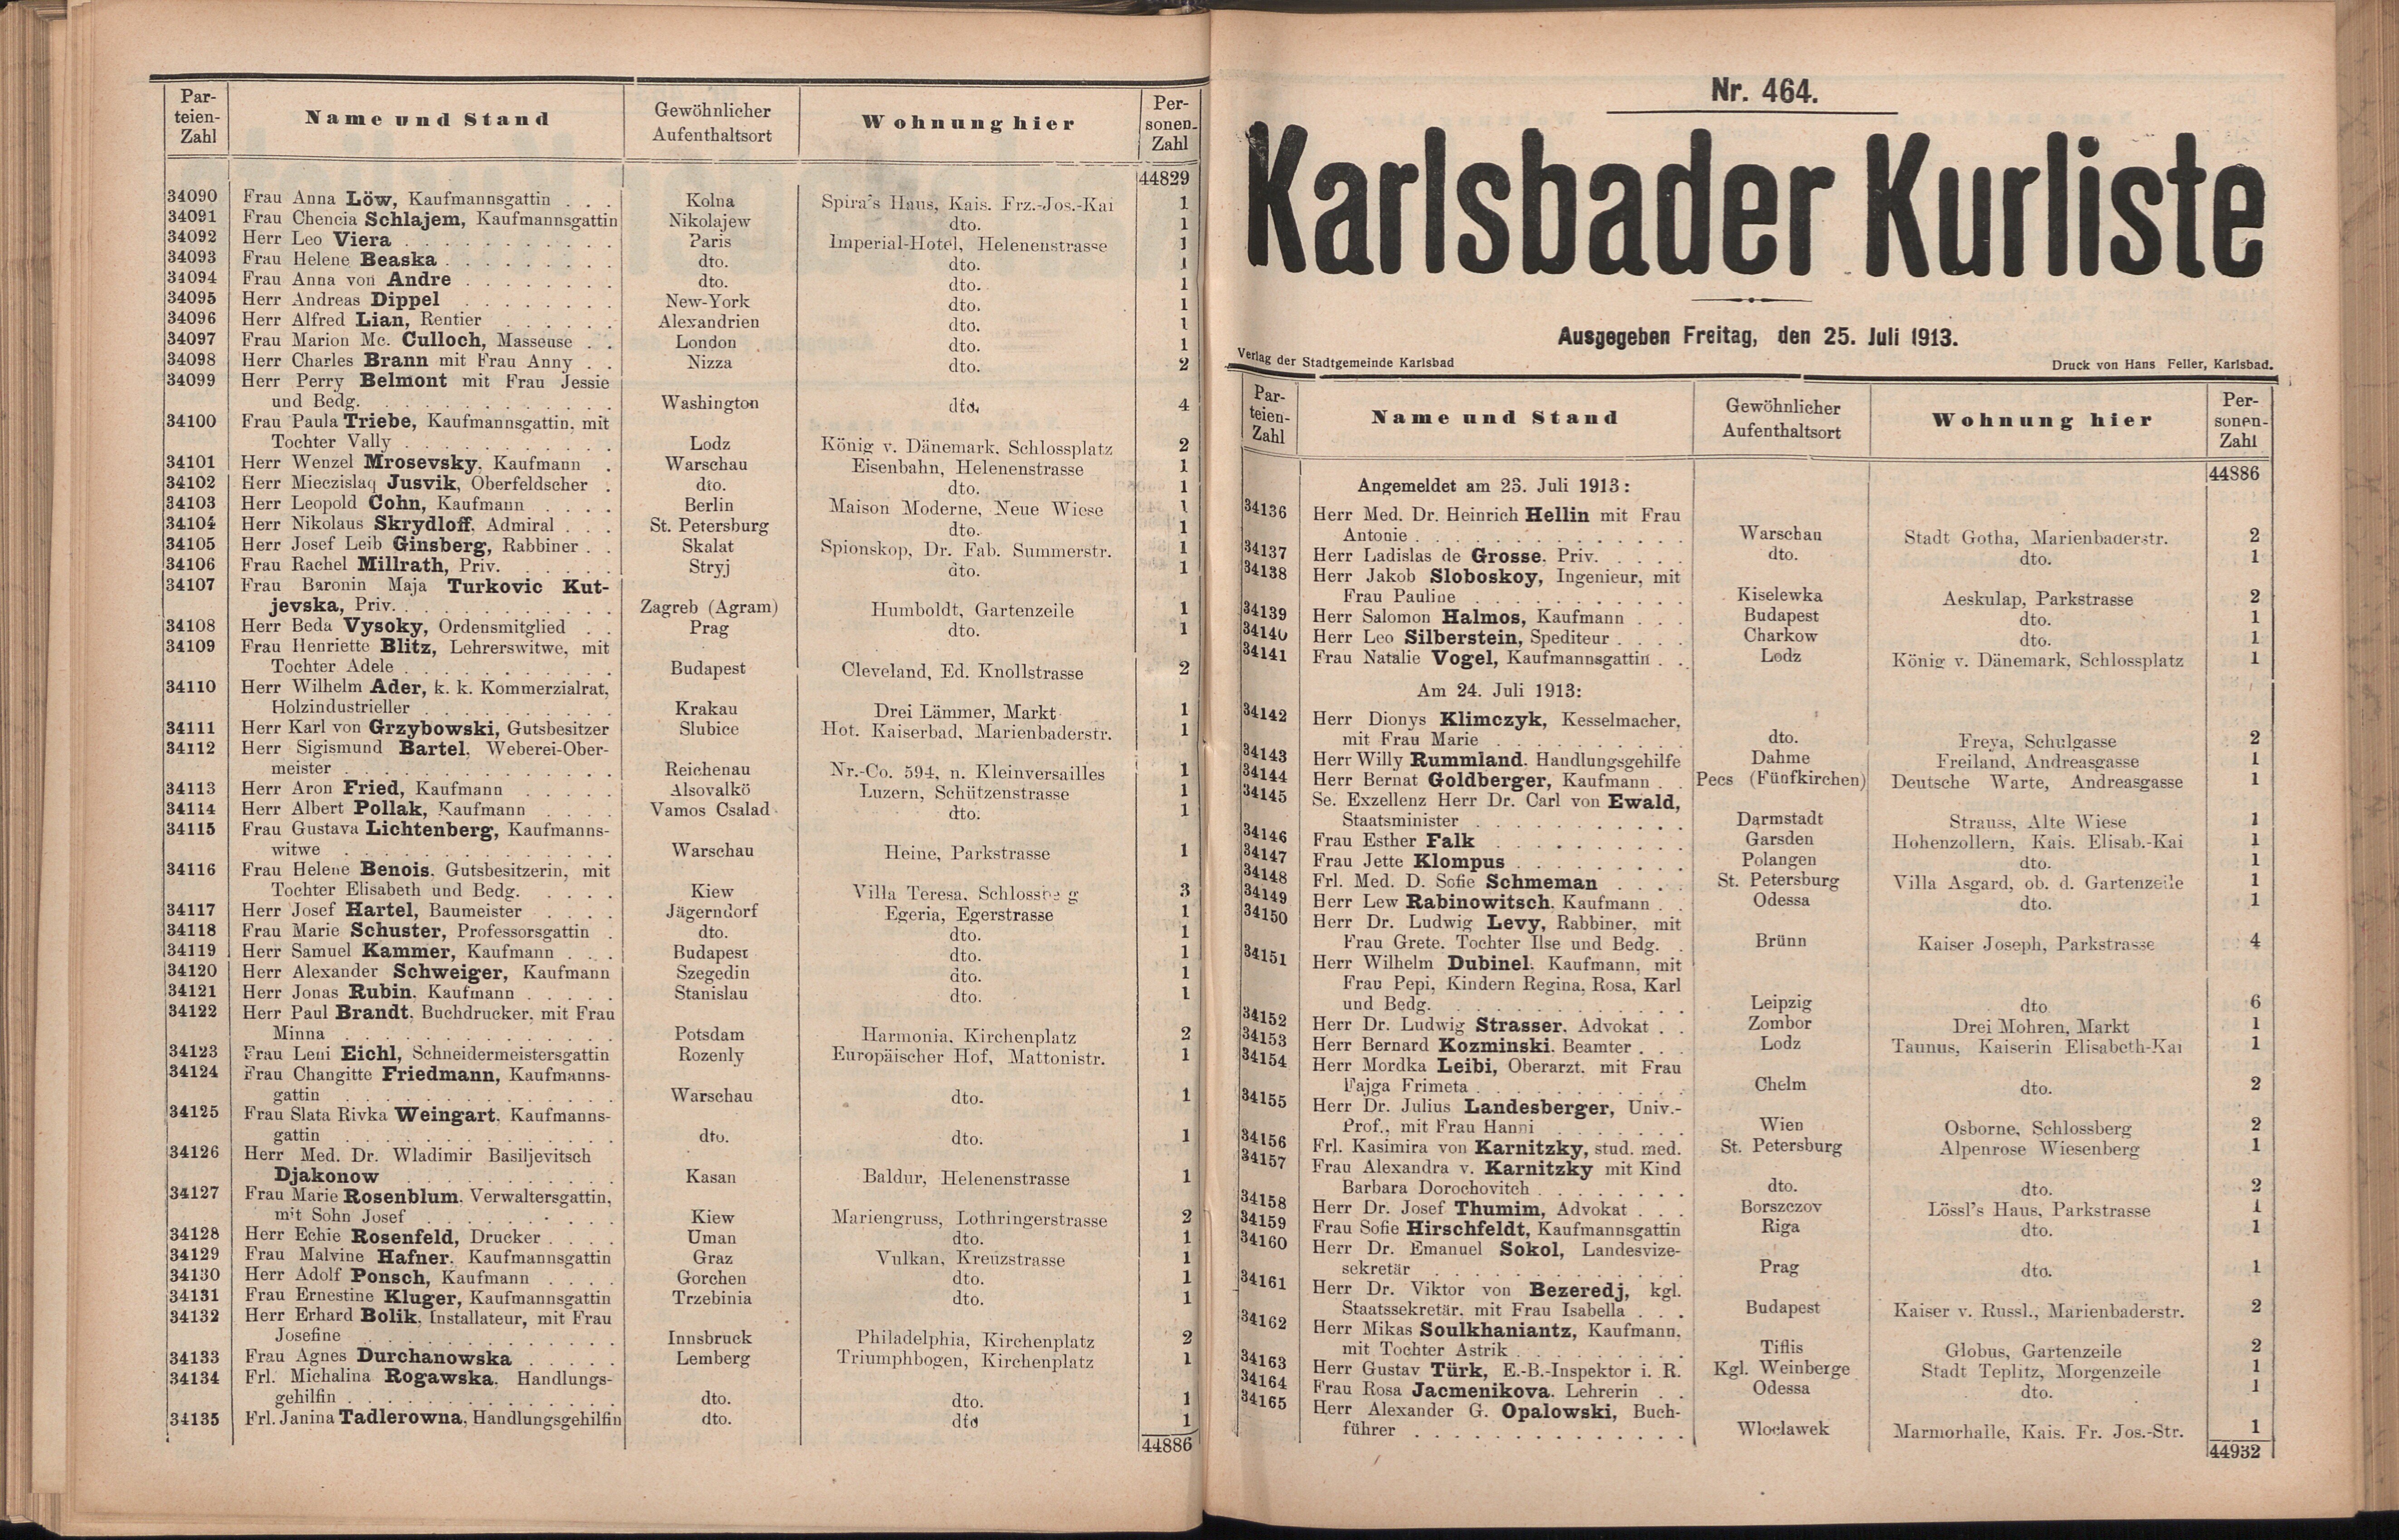 198. soap-kv_knihovna_karlsbader-kurliste-1913-2_1980